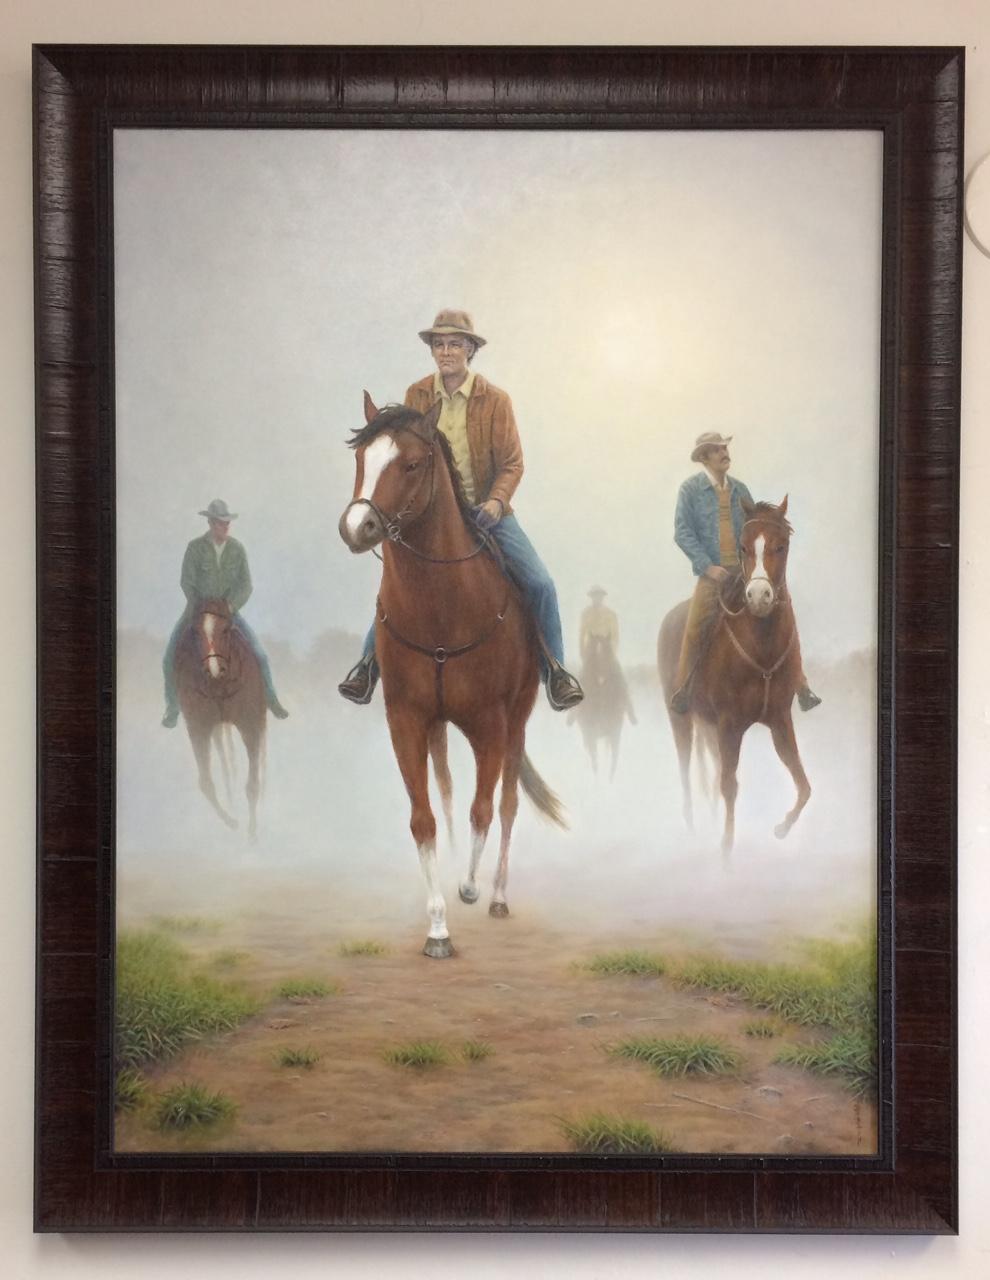 Barry DeBaun Landscape Painting - The Horsemen, original 40x30 realistic equestrian landscape